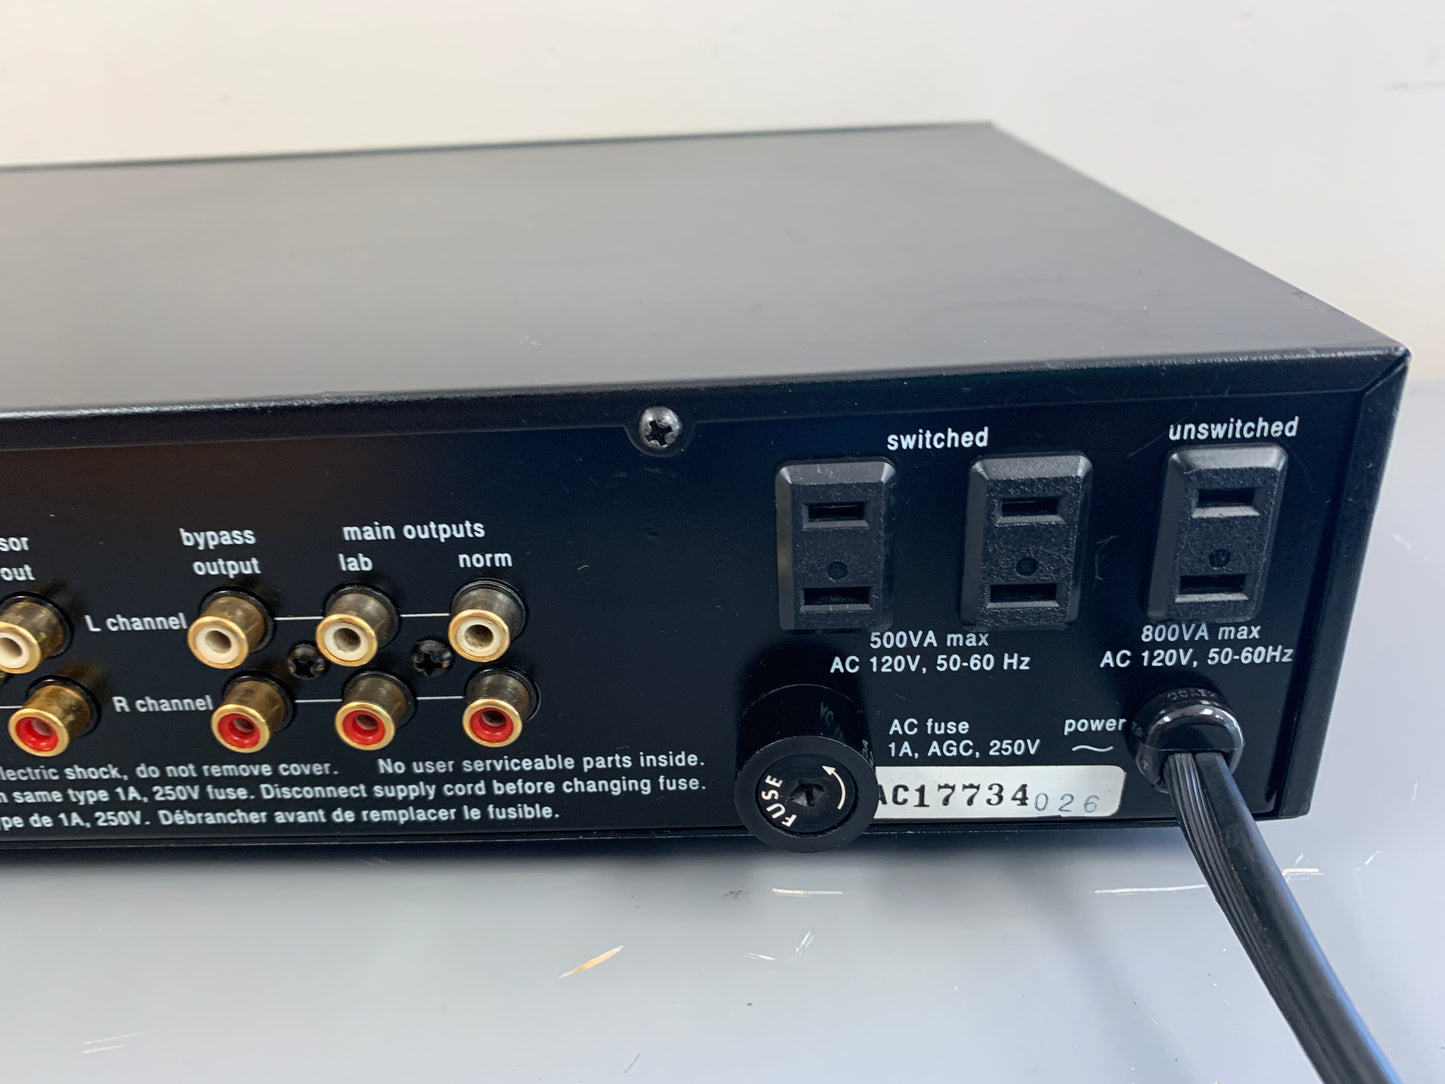 Adcom GFP-565 Stereo Preamplifier